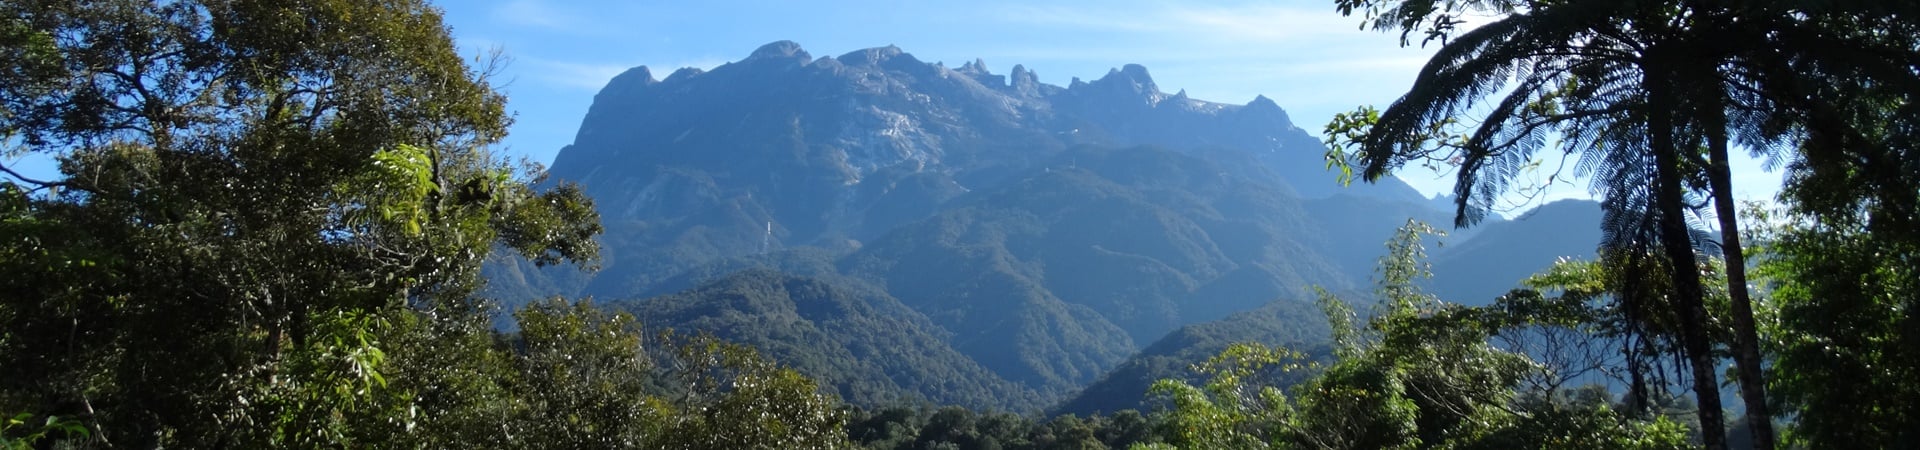 Trekking Challenge :  Mount Kinabalu Jungle to Mountain